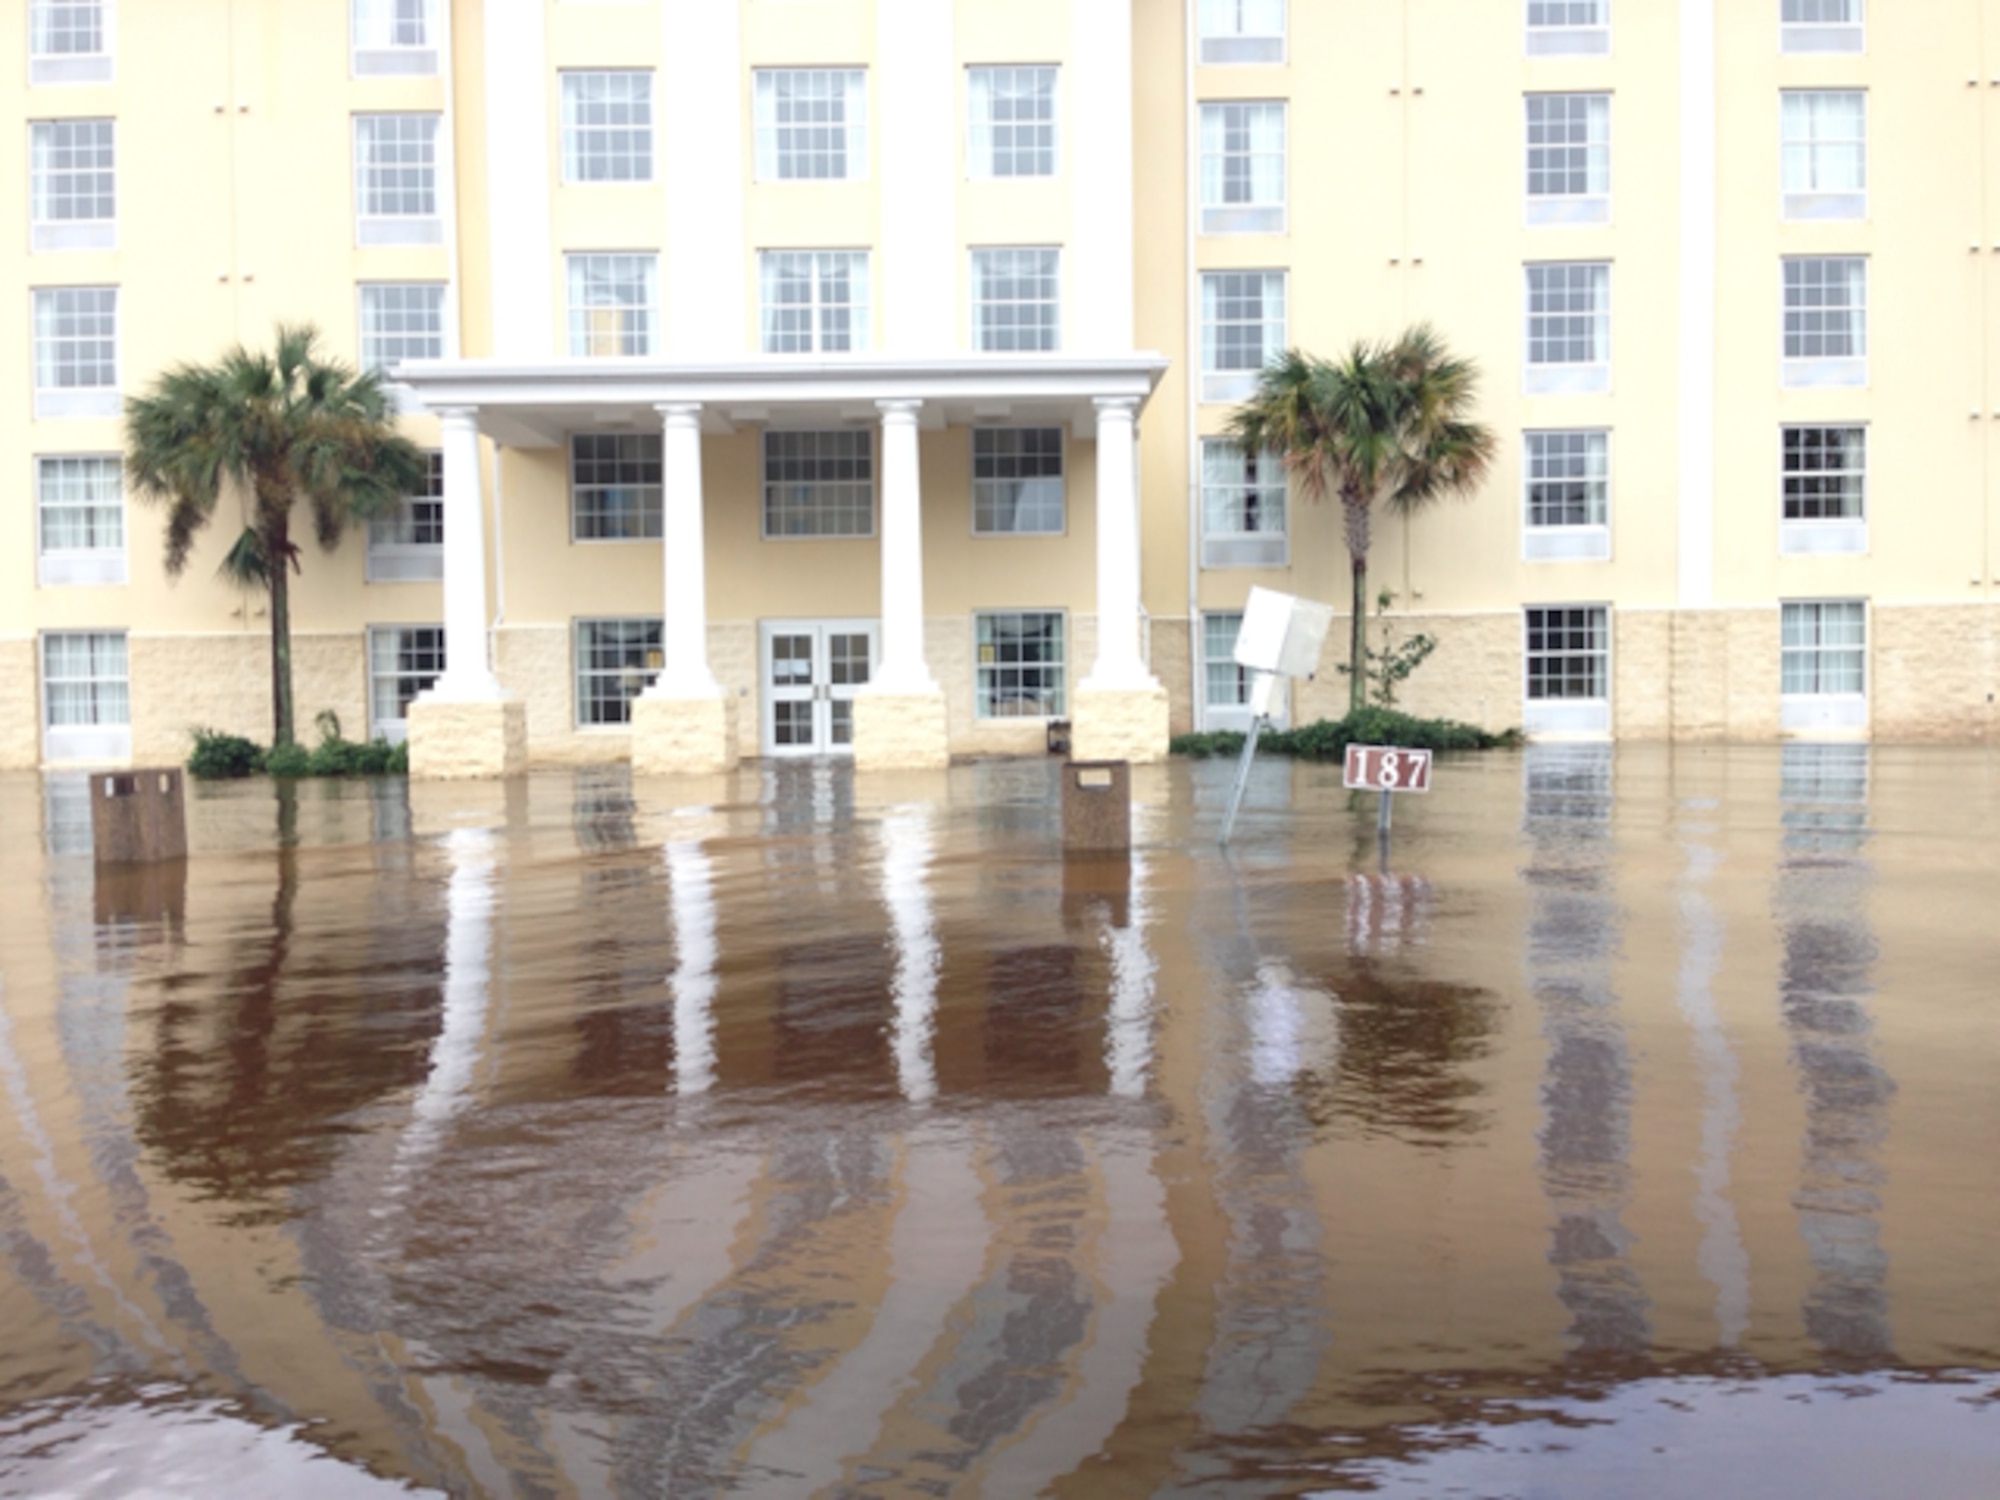 Hurricane Matthew caused major flooding at the FLETC Glynco primary dormitories. (Photo courtesy of FLETC)